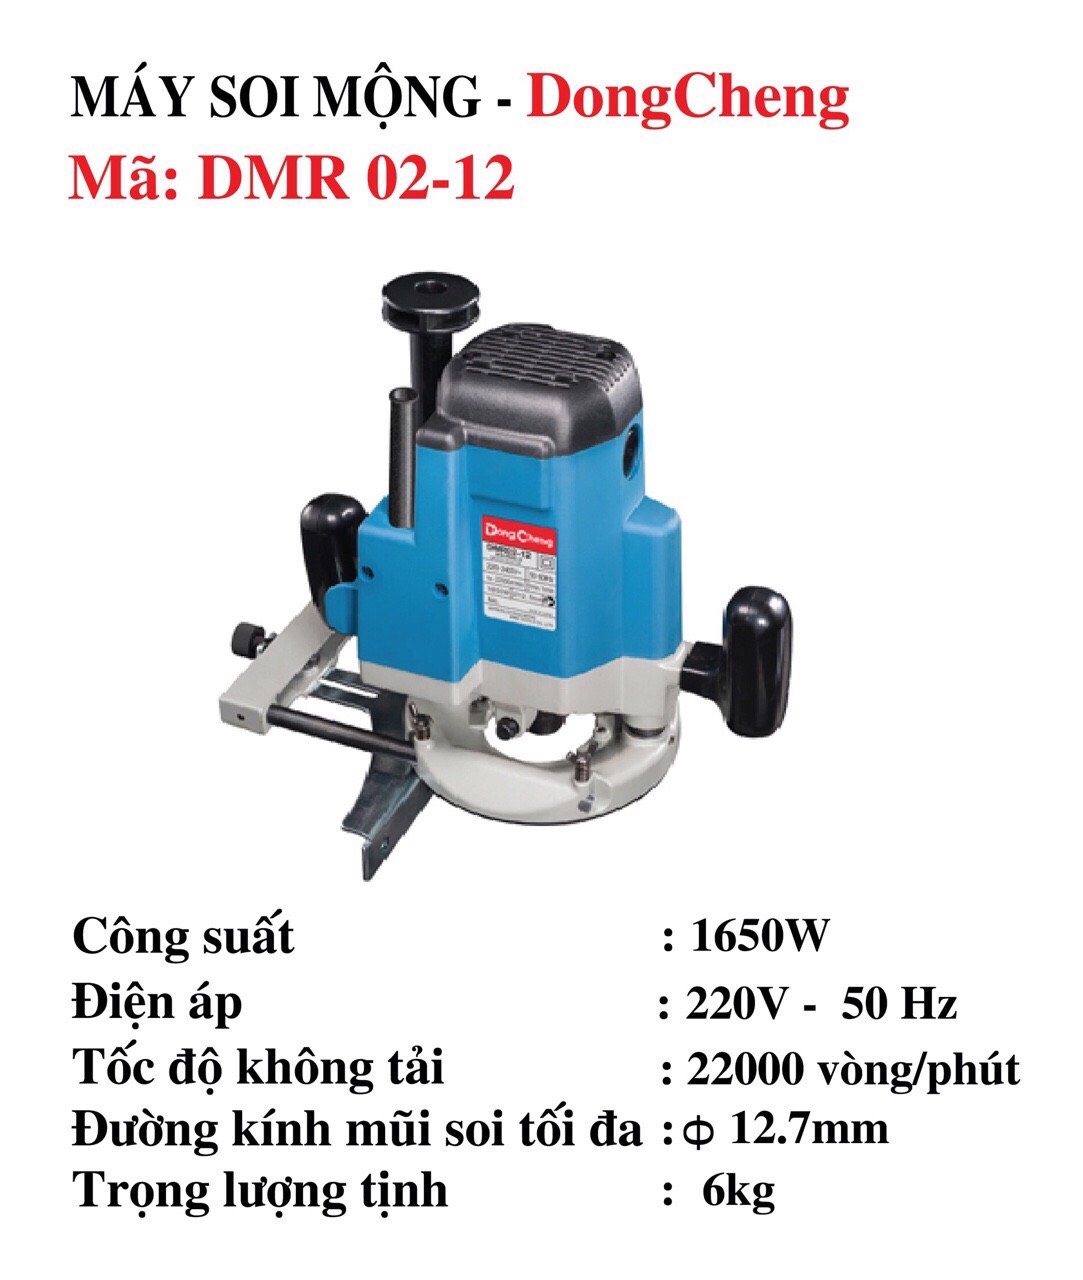 Máy soi cao Dongcheng DMR02-12